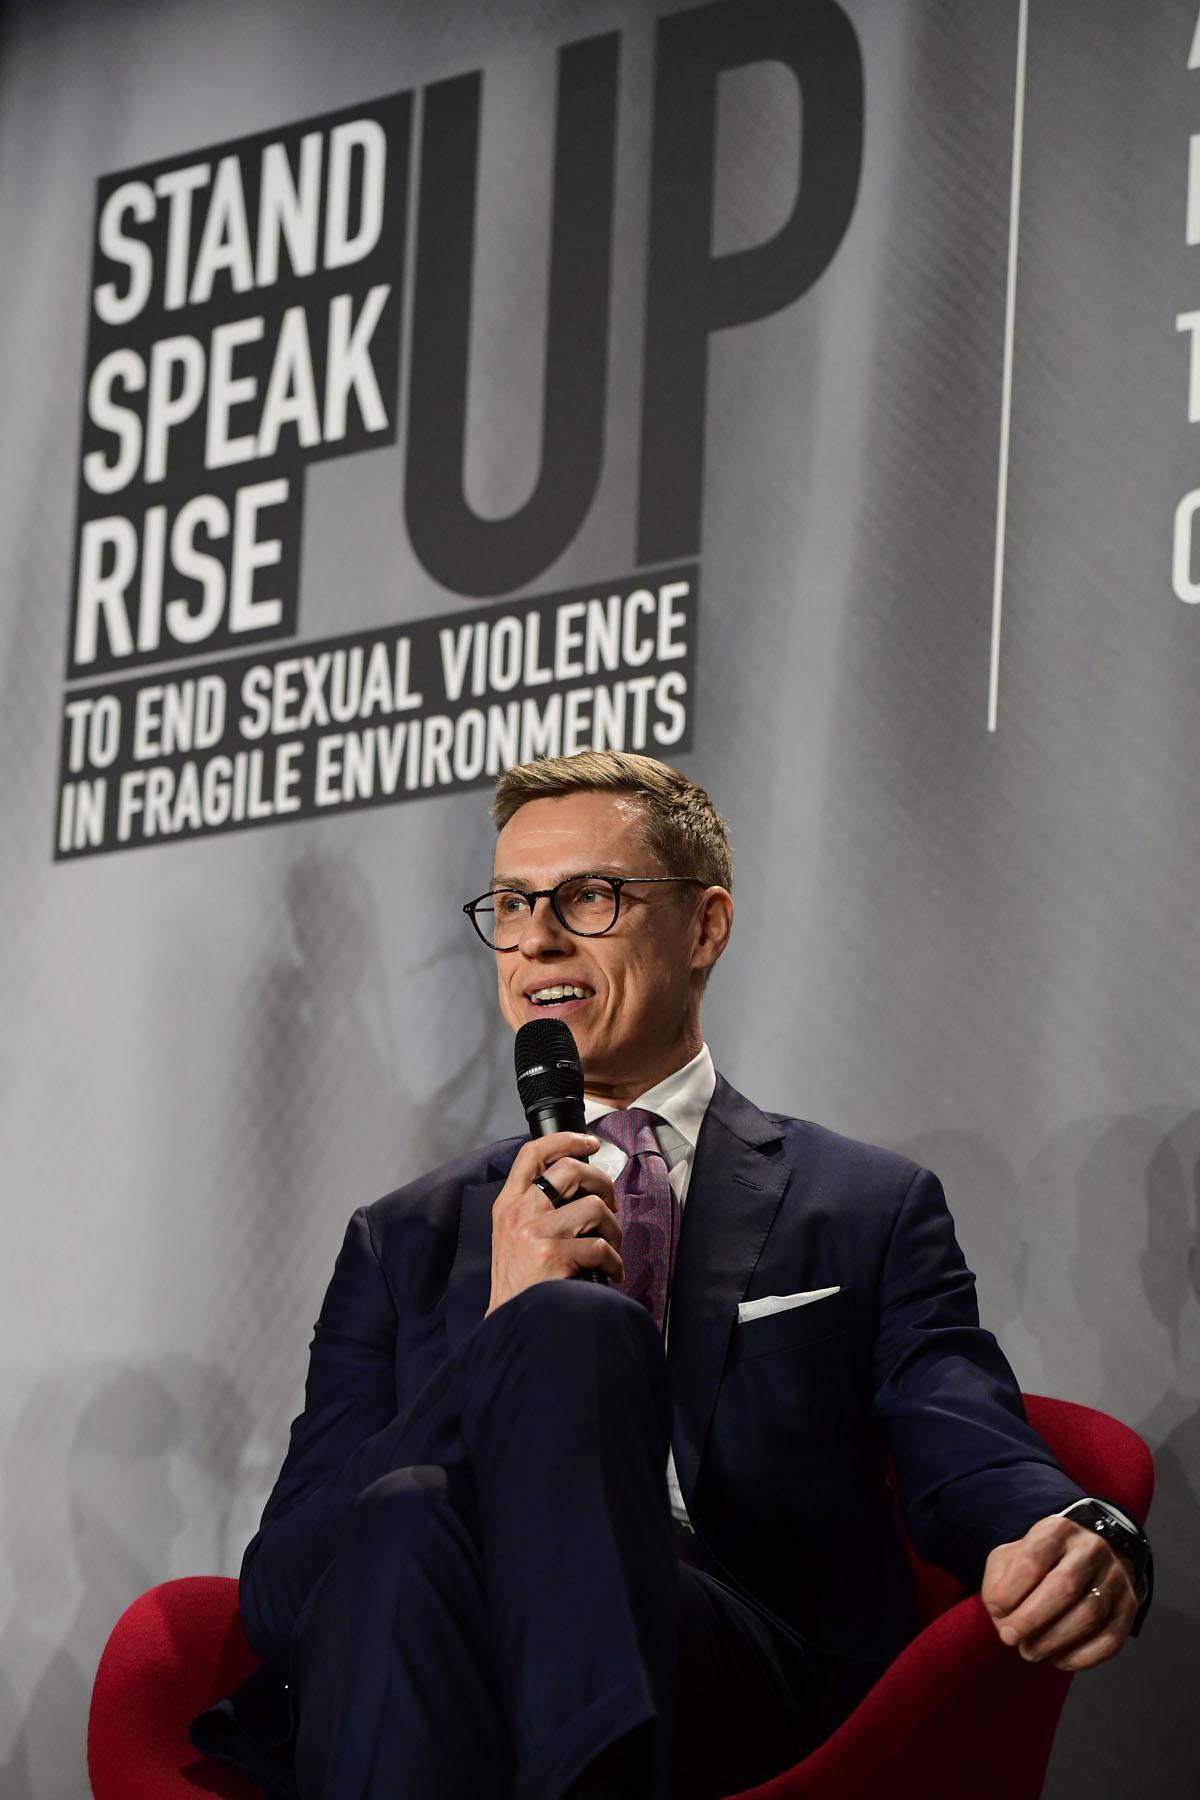 Gespréichsronn während dem Internationale Forum "Stand Speak Rise Up!"